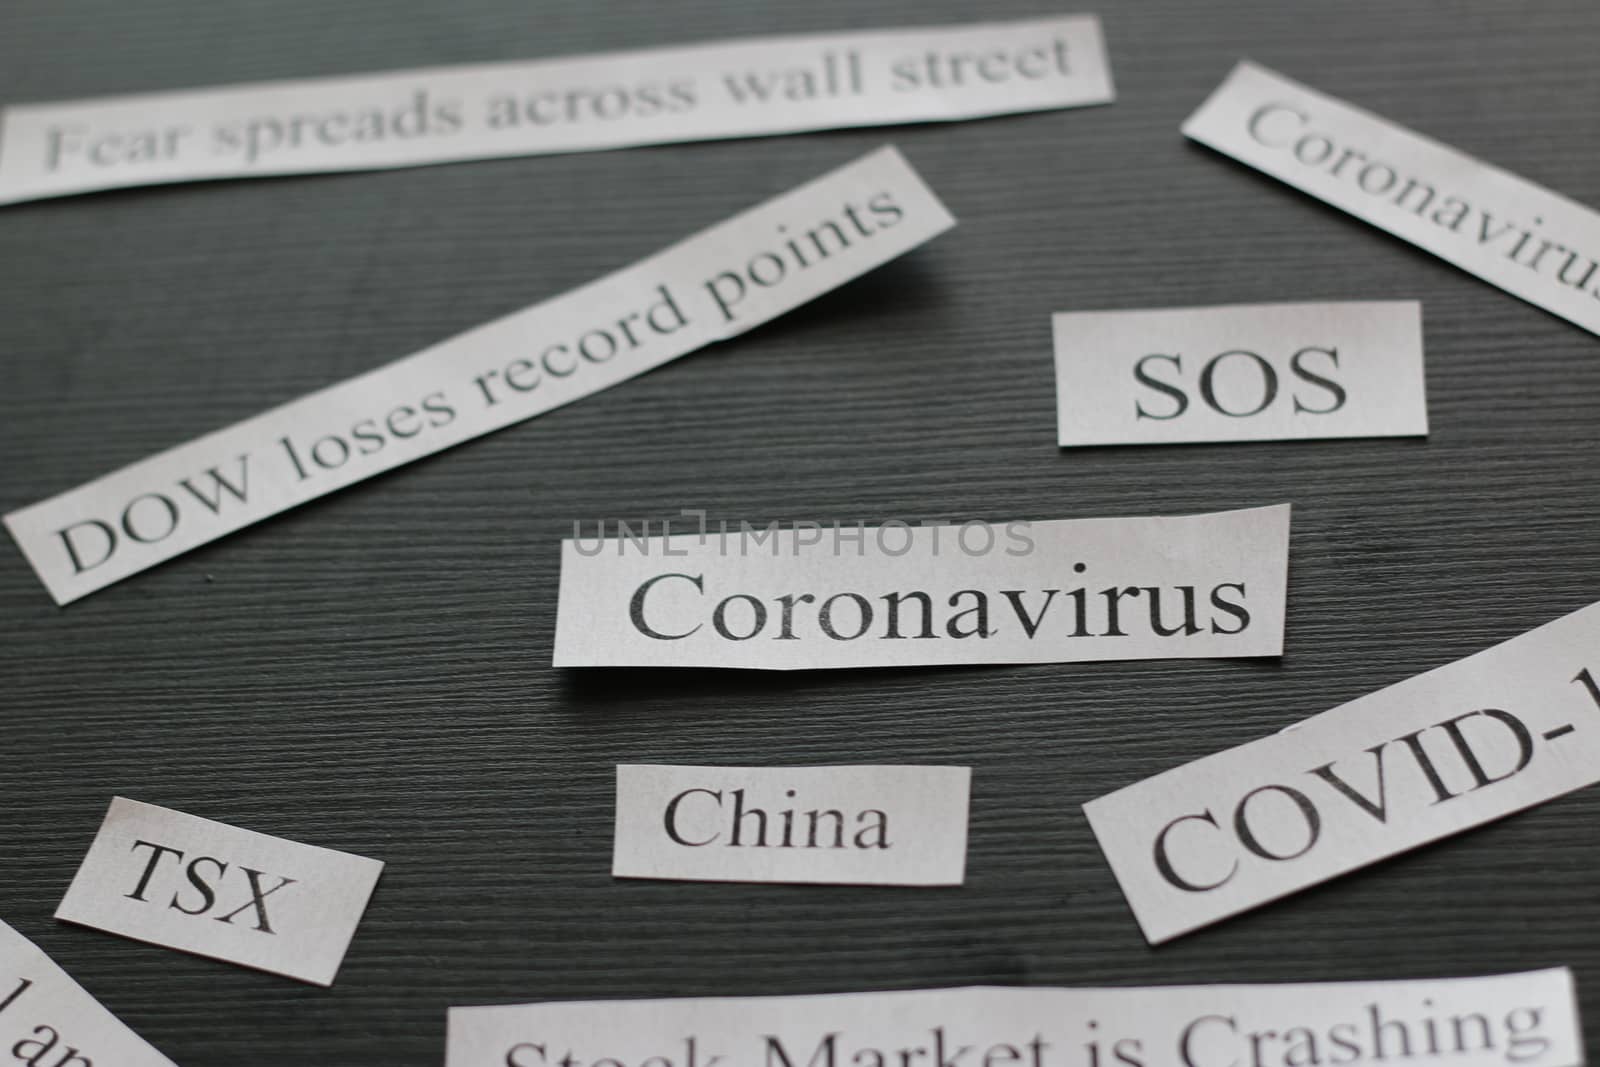 theme of stock market crashing in 2020 from coronavirus